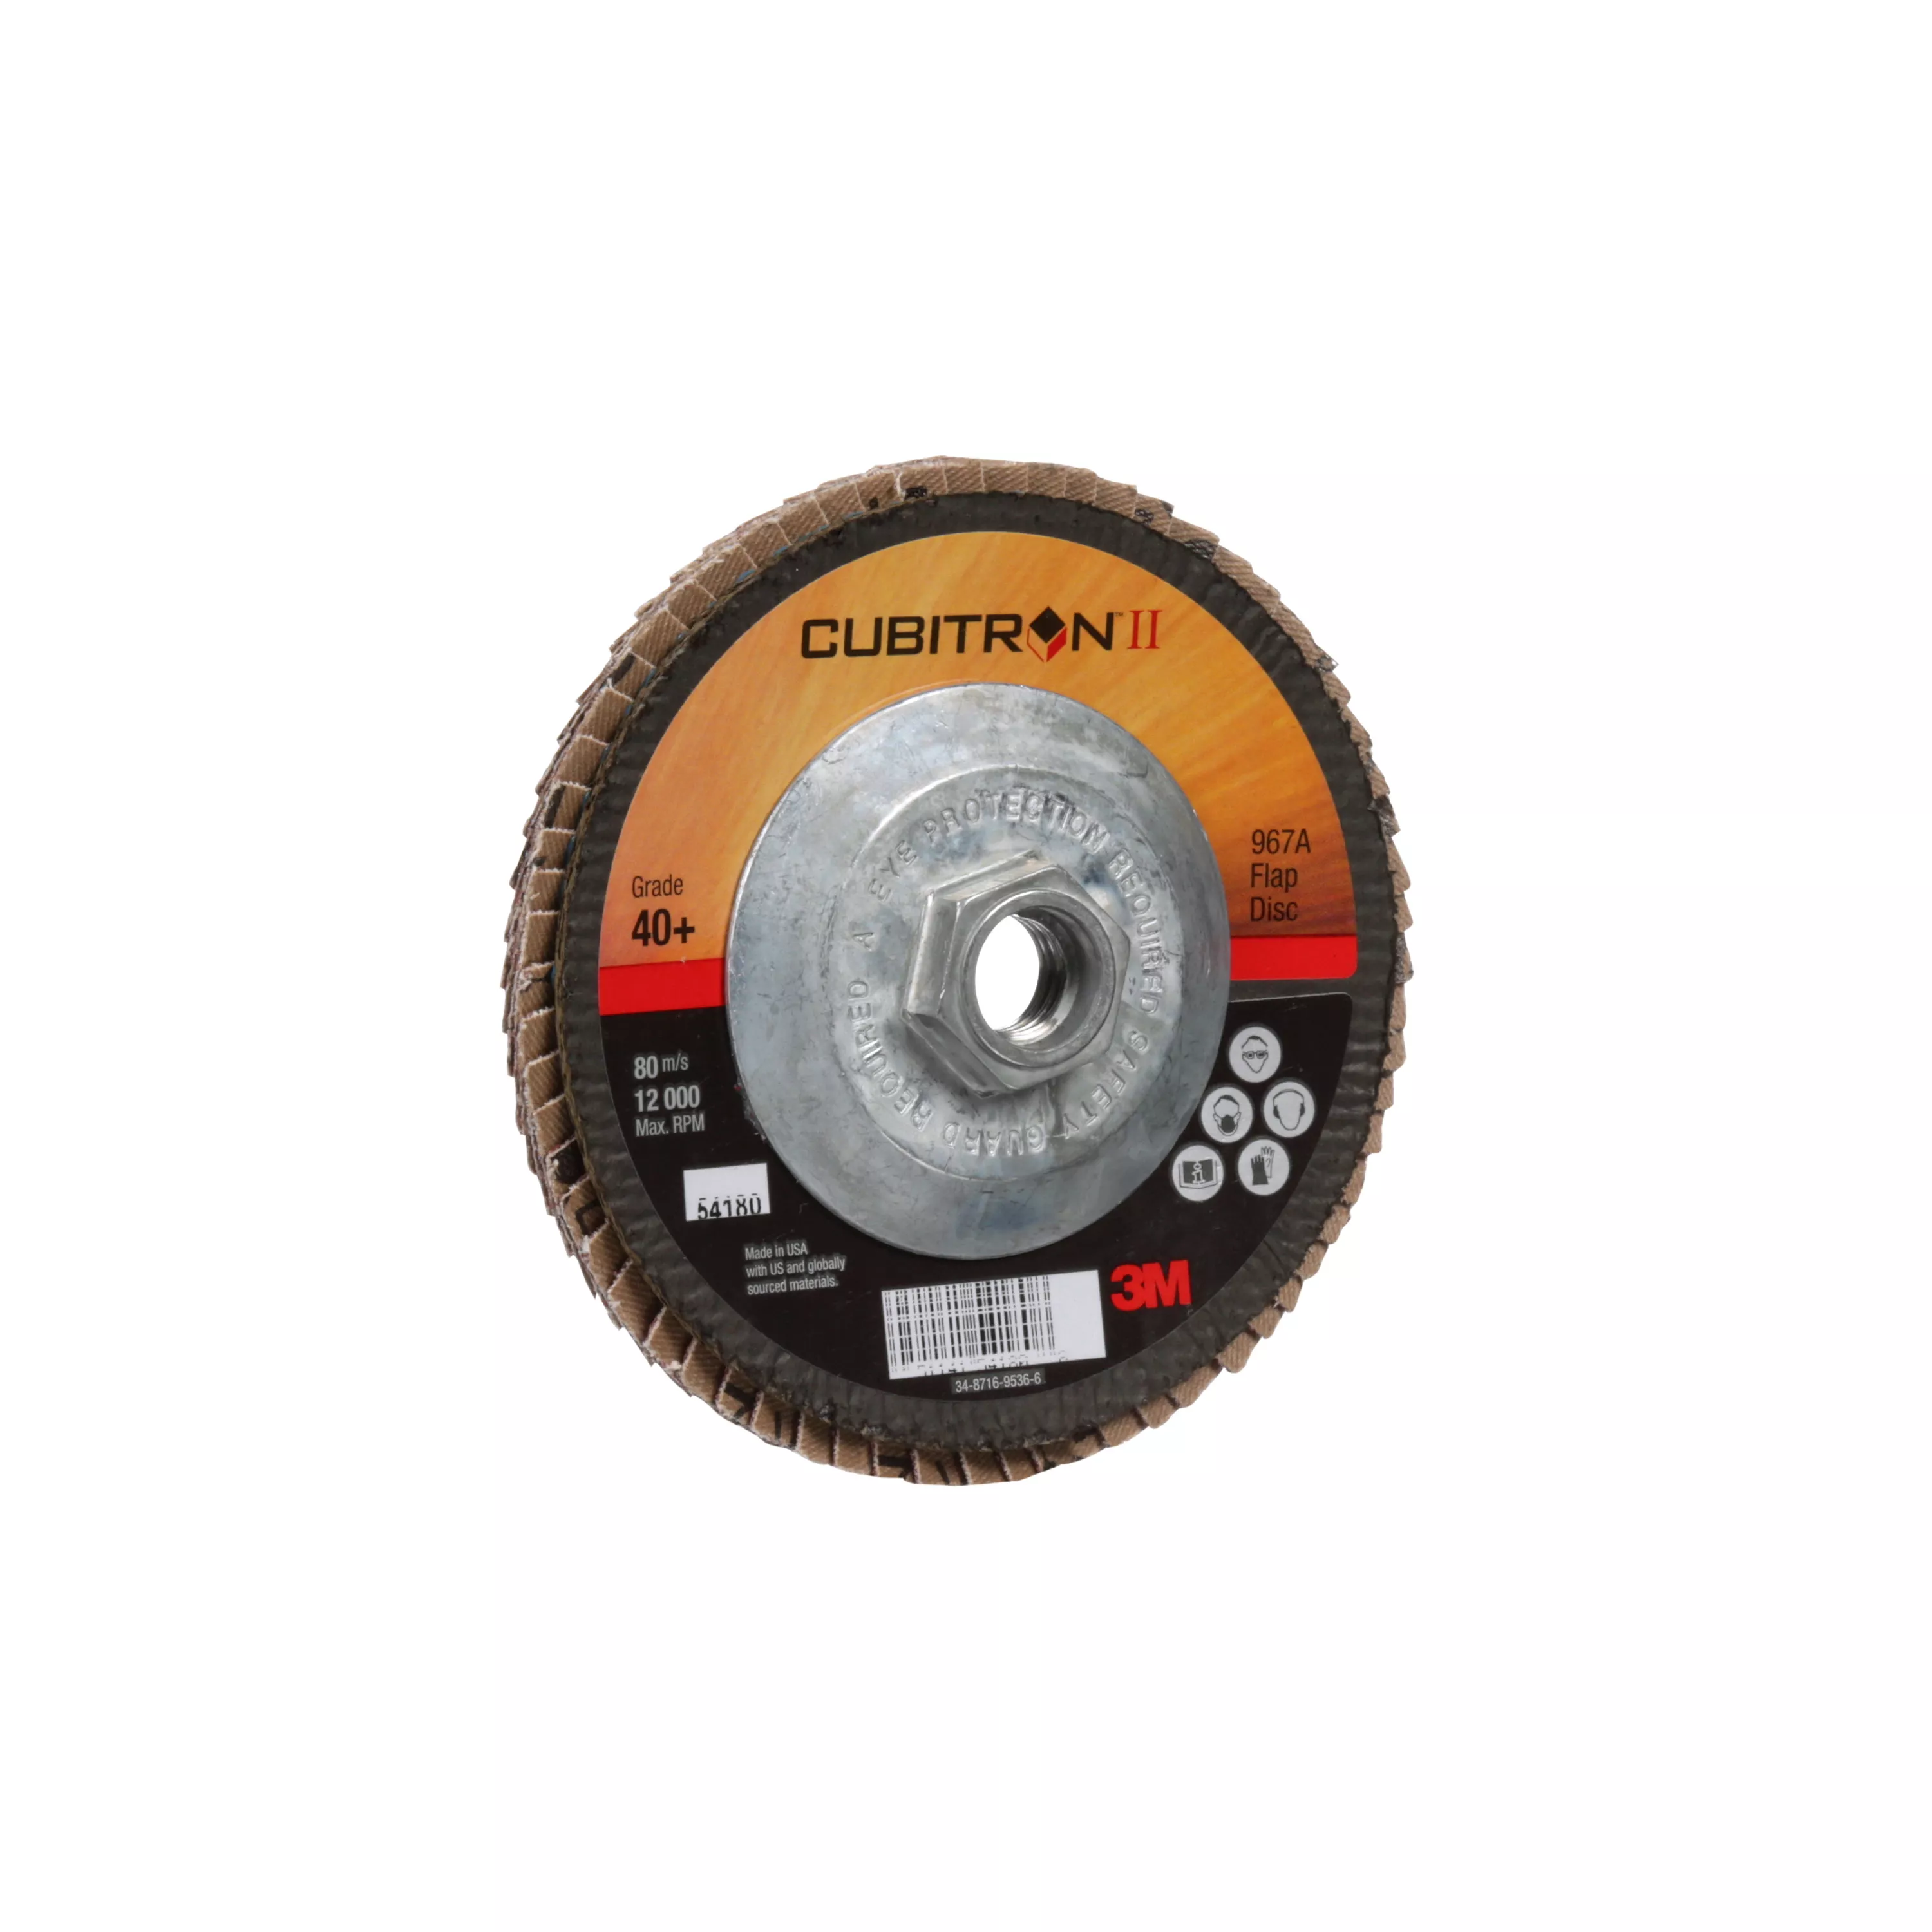 Product Number 967A | 3M™ Cubitron™ II Flap Disc 967A